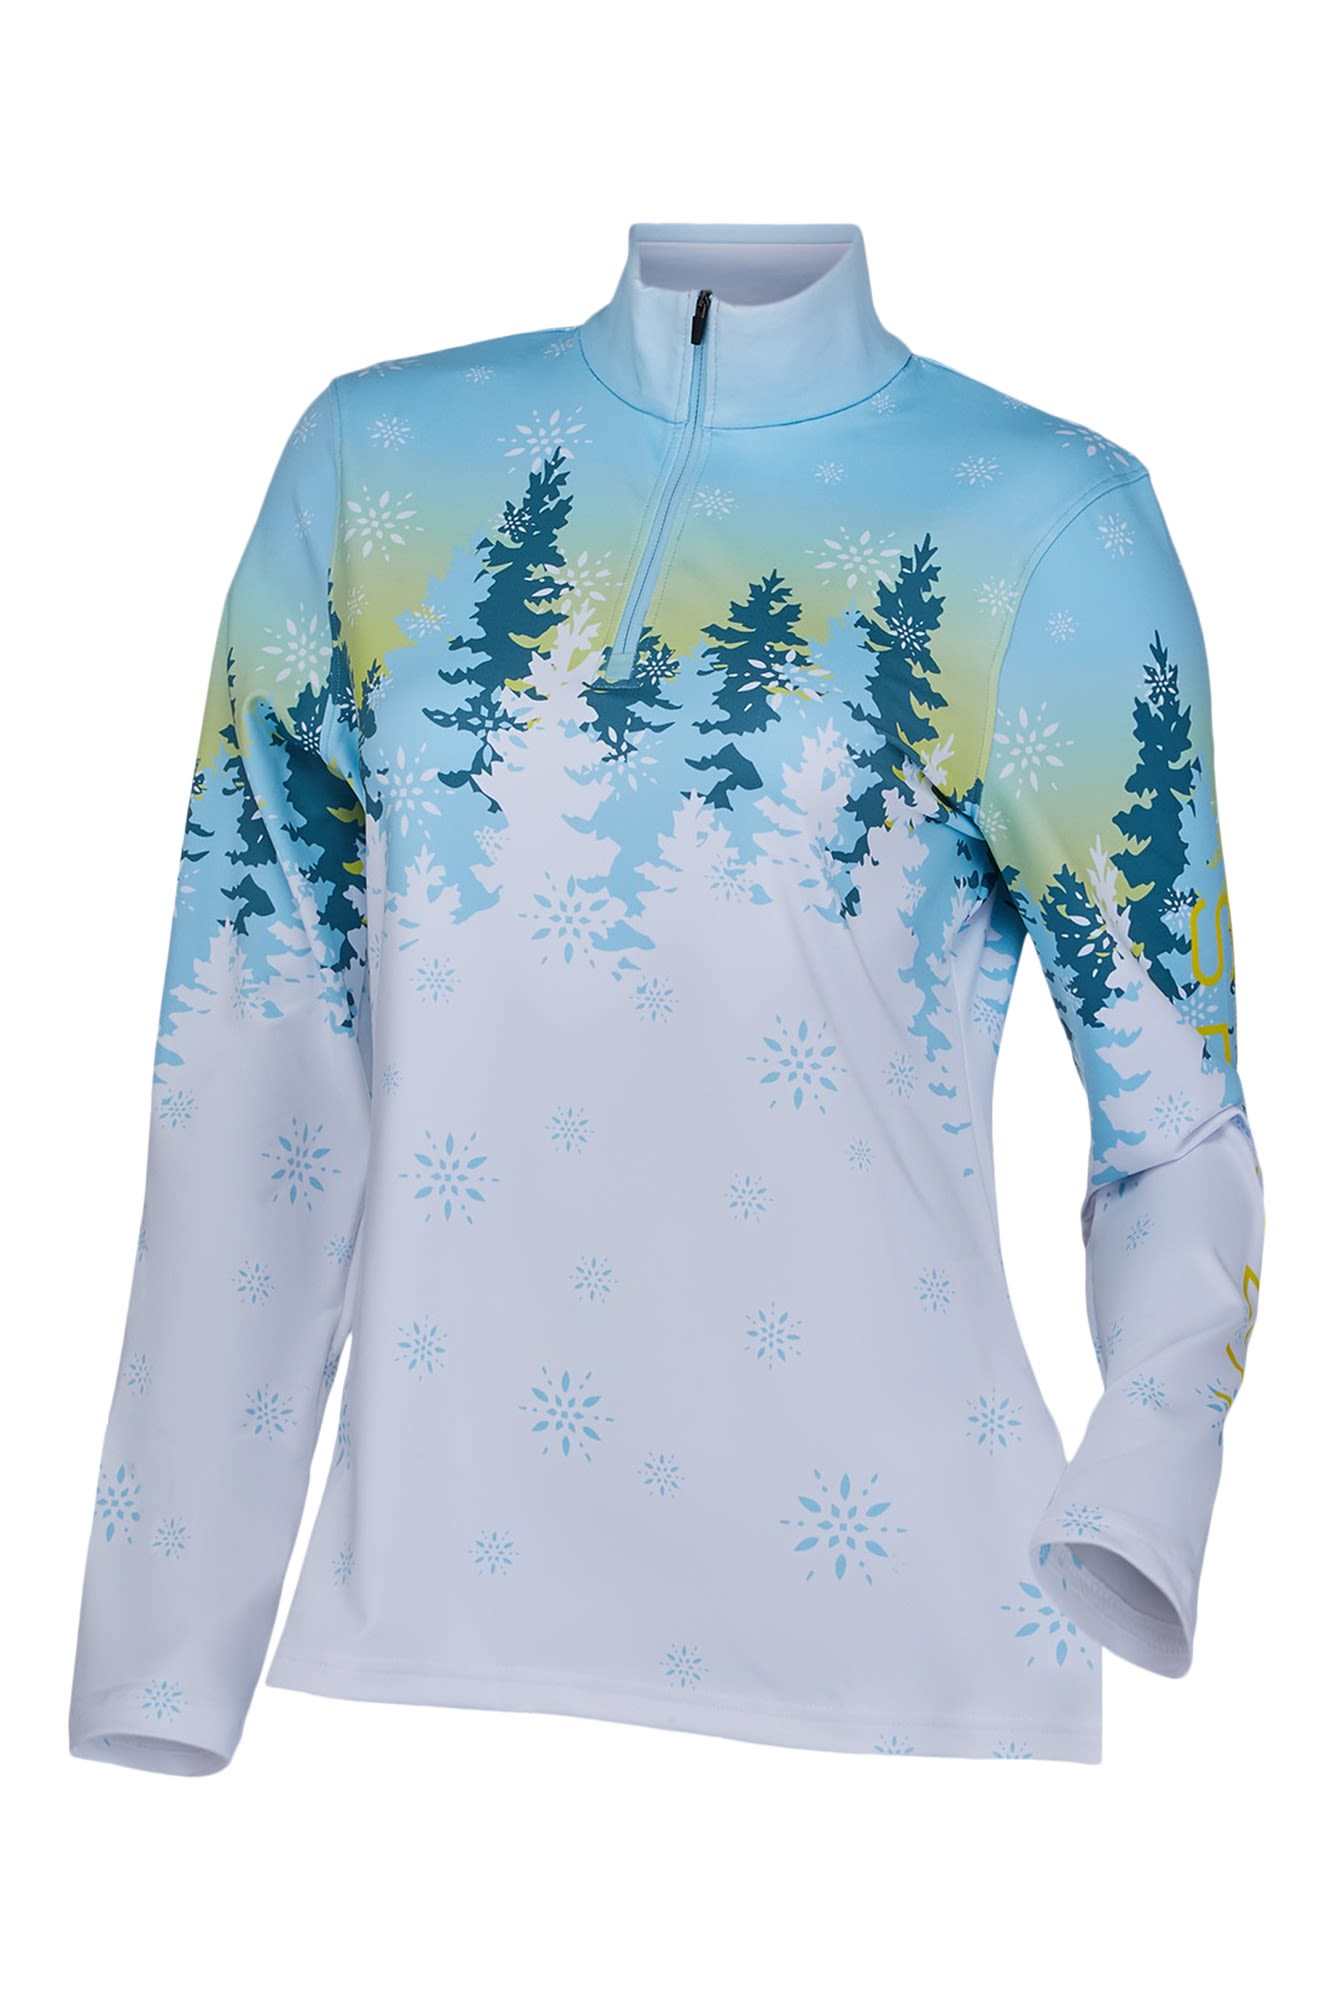 Spyder Snow Angel T-Neck Top Weiss- Female Langarm-Shirts- Grsse XS - Farbe Frost unter Spyder